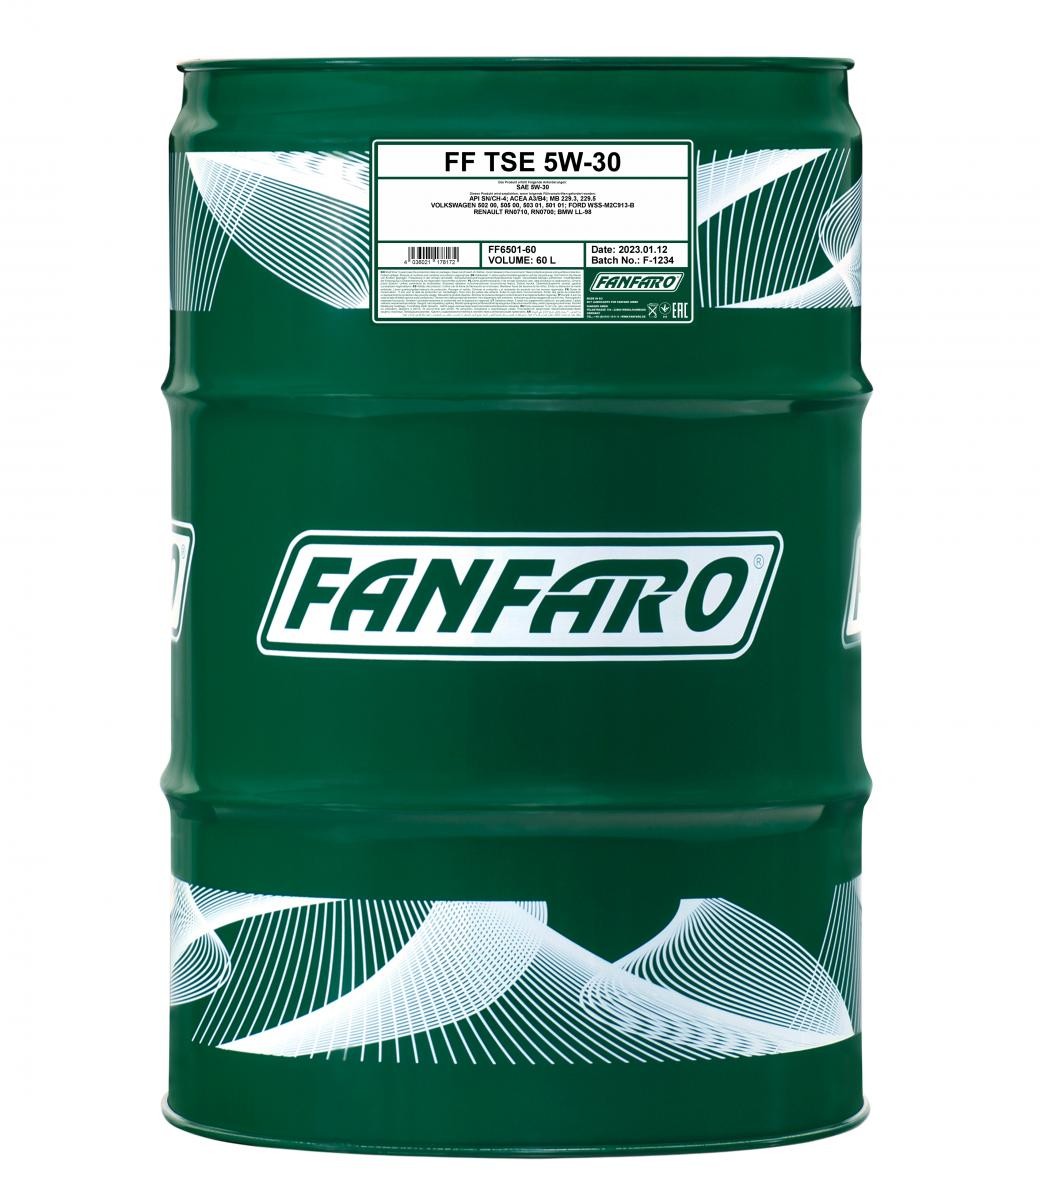 FF6501-60 FANFARO Master Line, TSE 5W-30, 60l, Teilsynthetiköl Motoröl FF6501-60 günstig kaufen